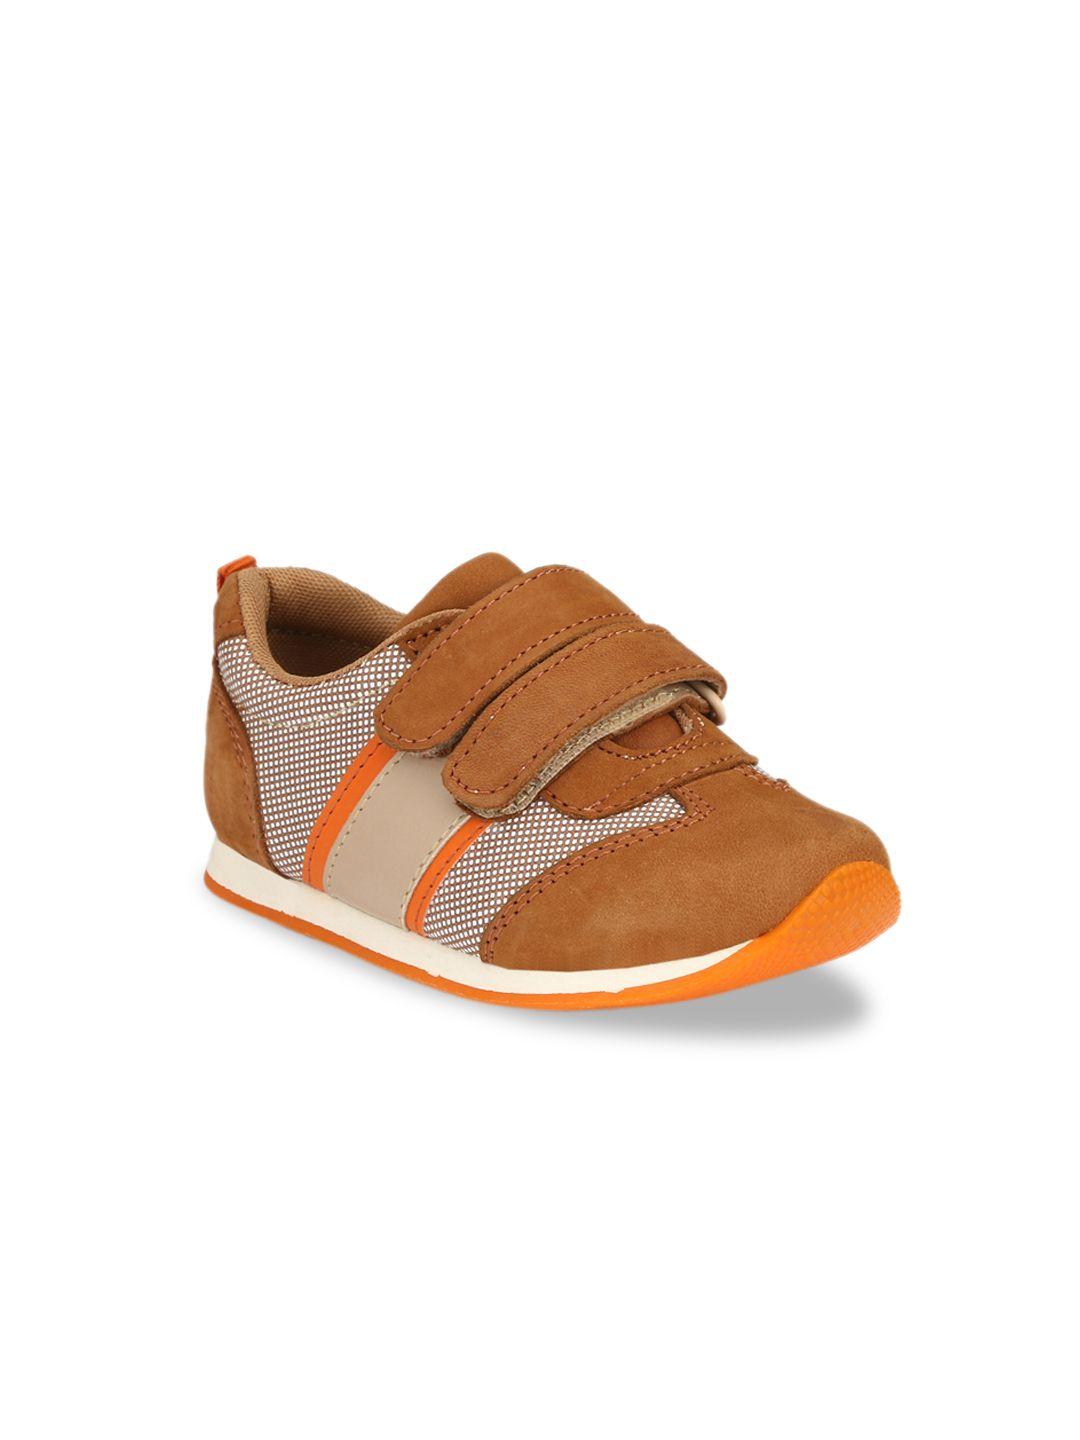 tuskey boys tan brown slip-on genuine leather breathable antiskid sneakers